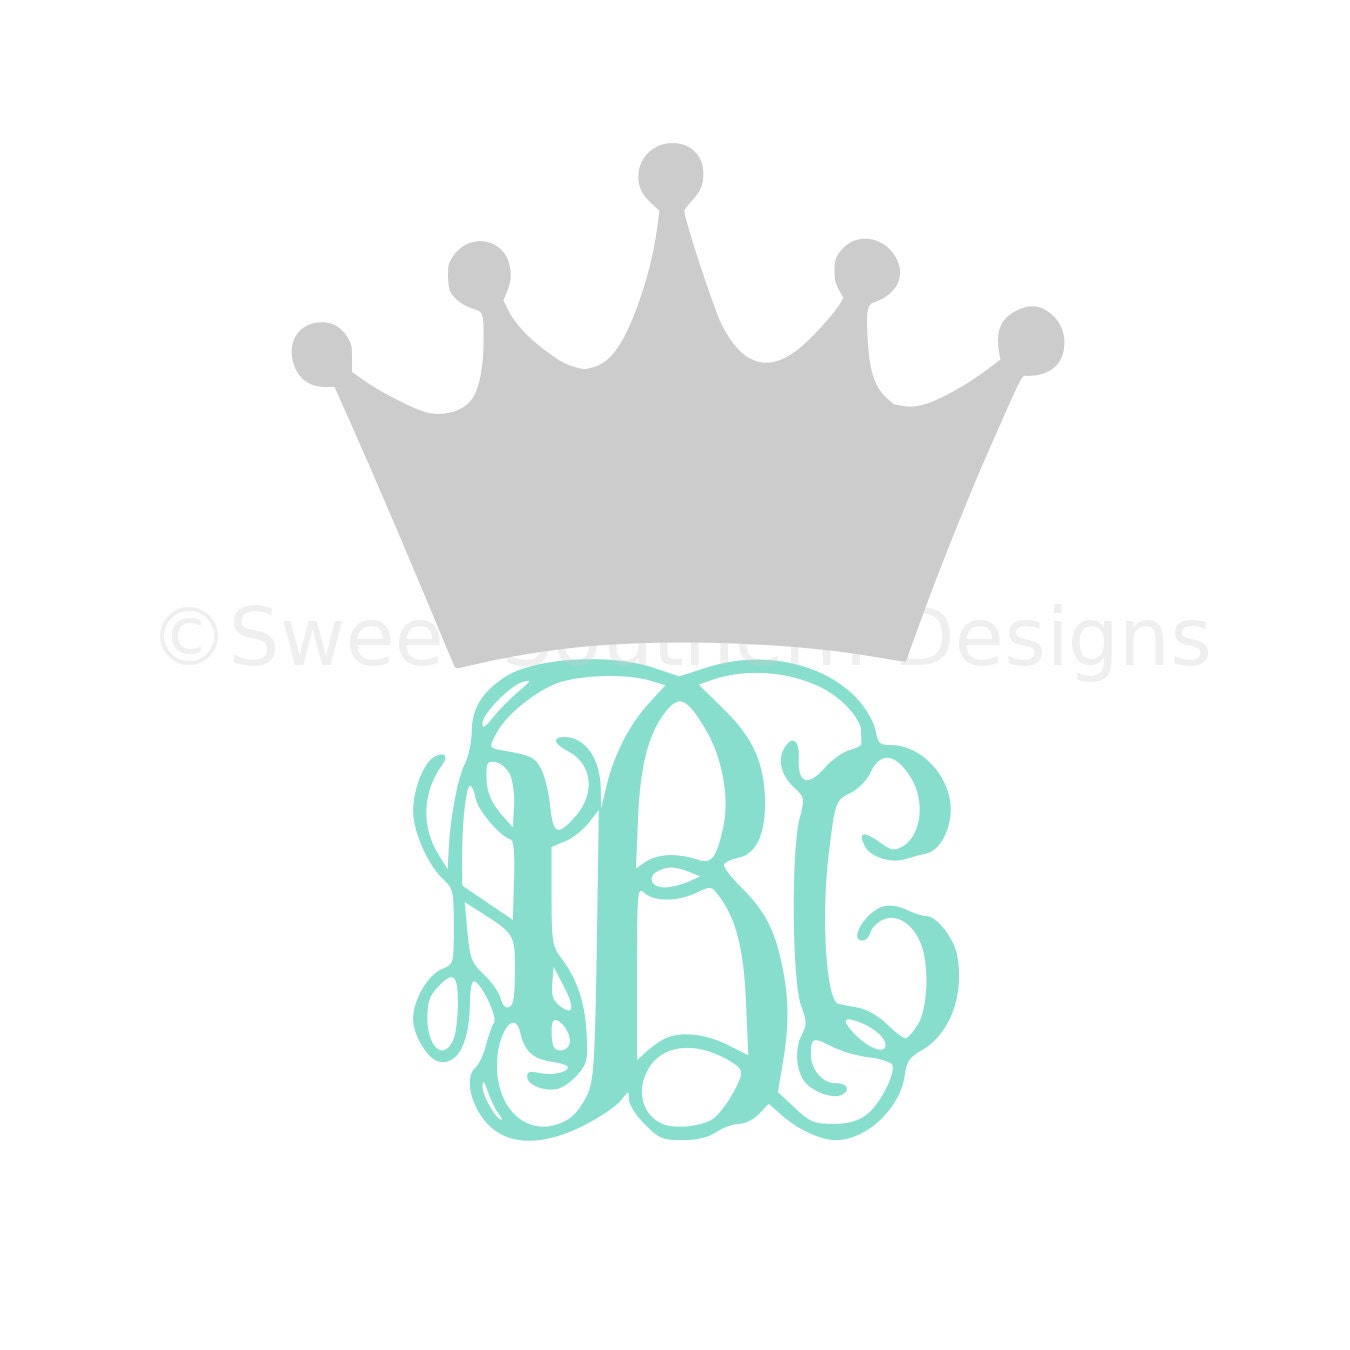 Monogram tiara crown SVG instant download design for cricut or